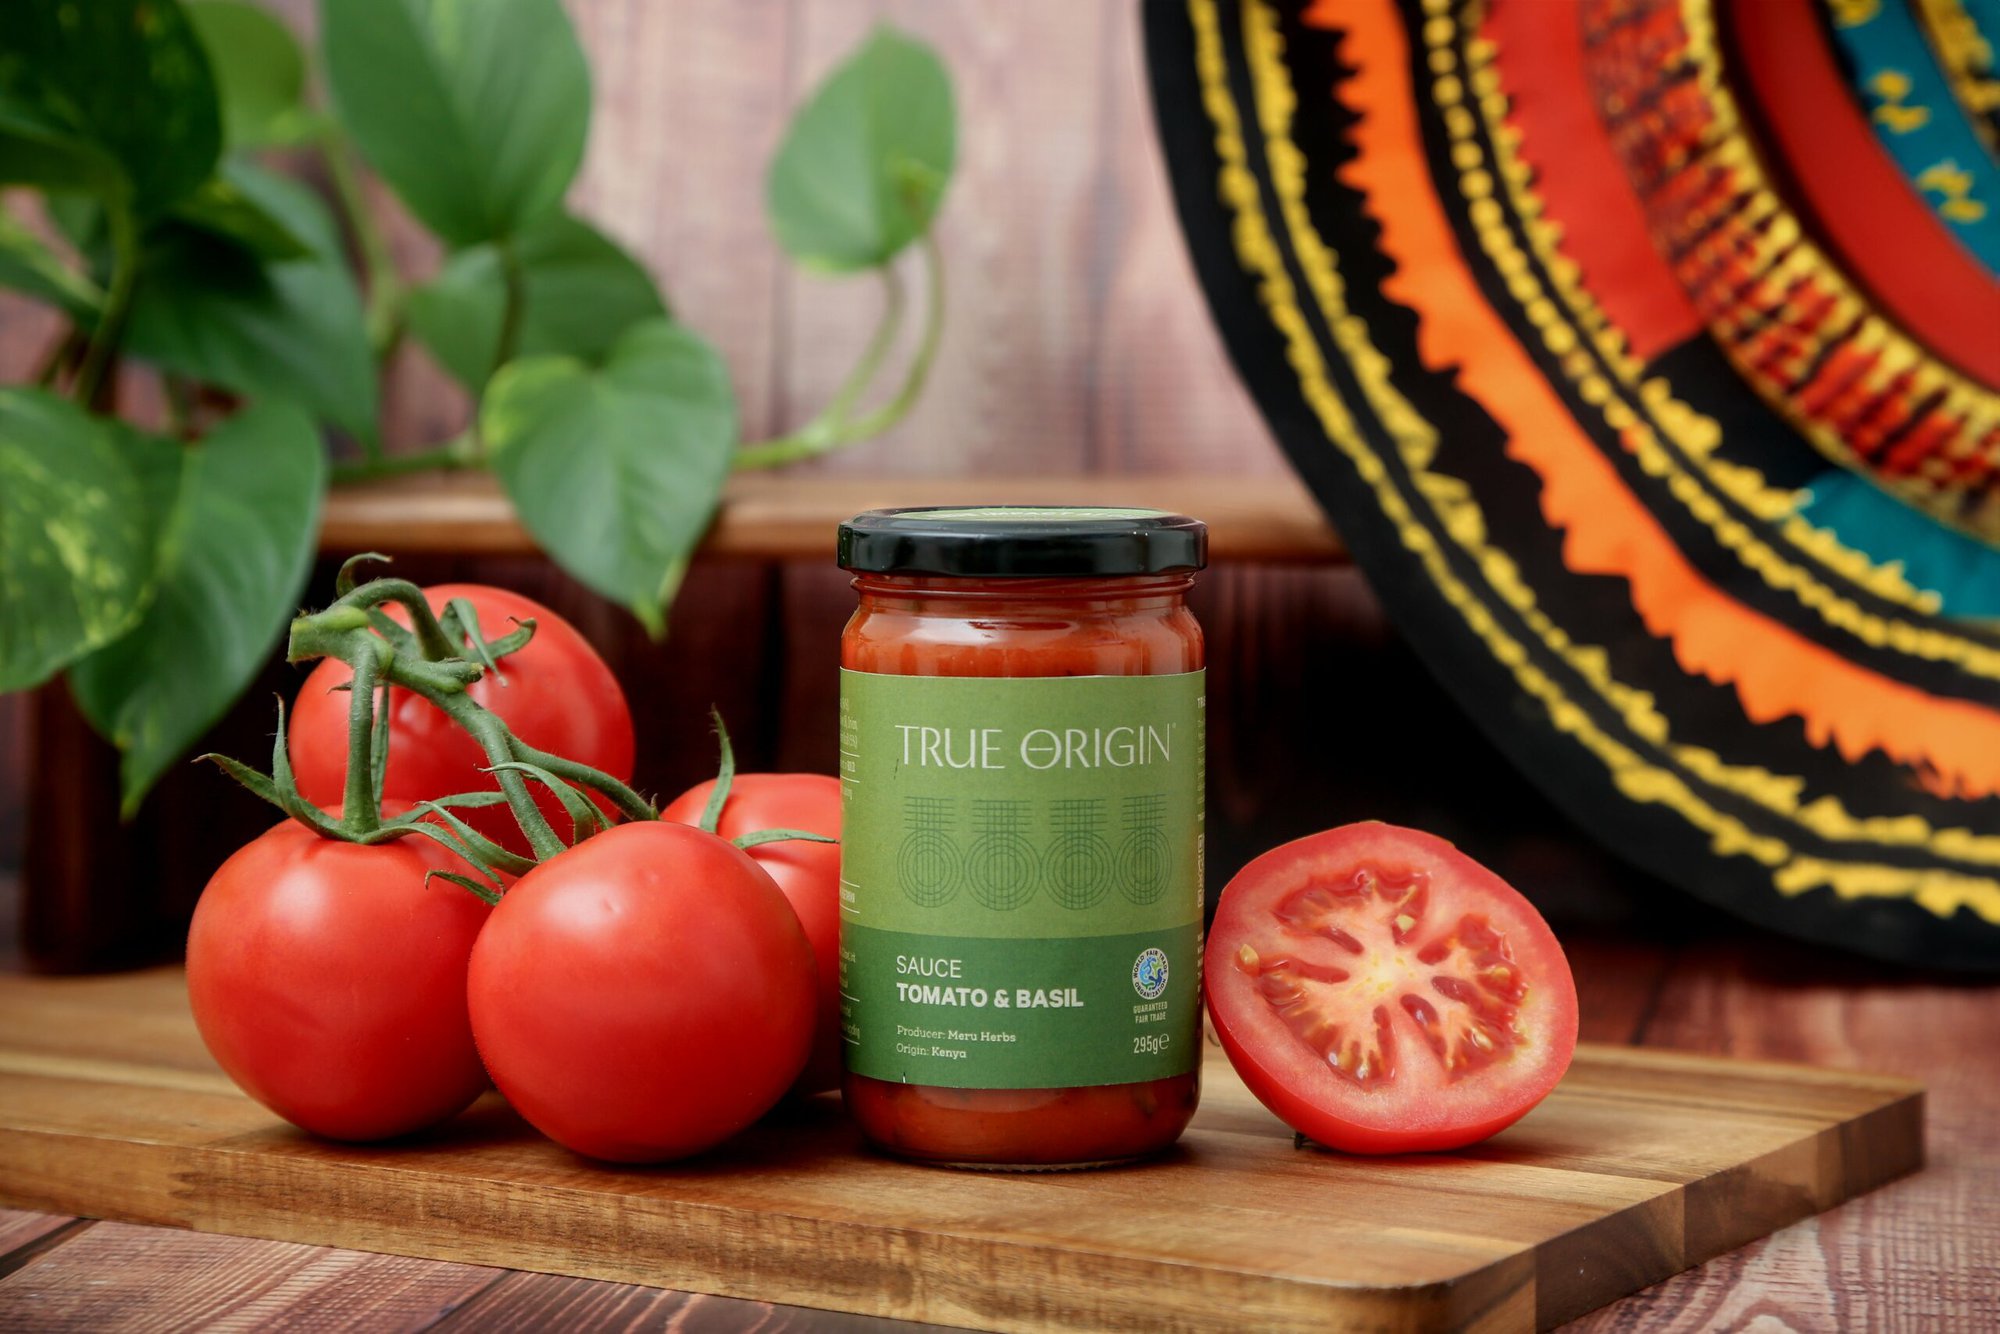 Tomato &amp; Basil Sauce (295g)